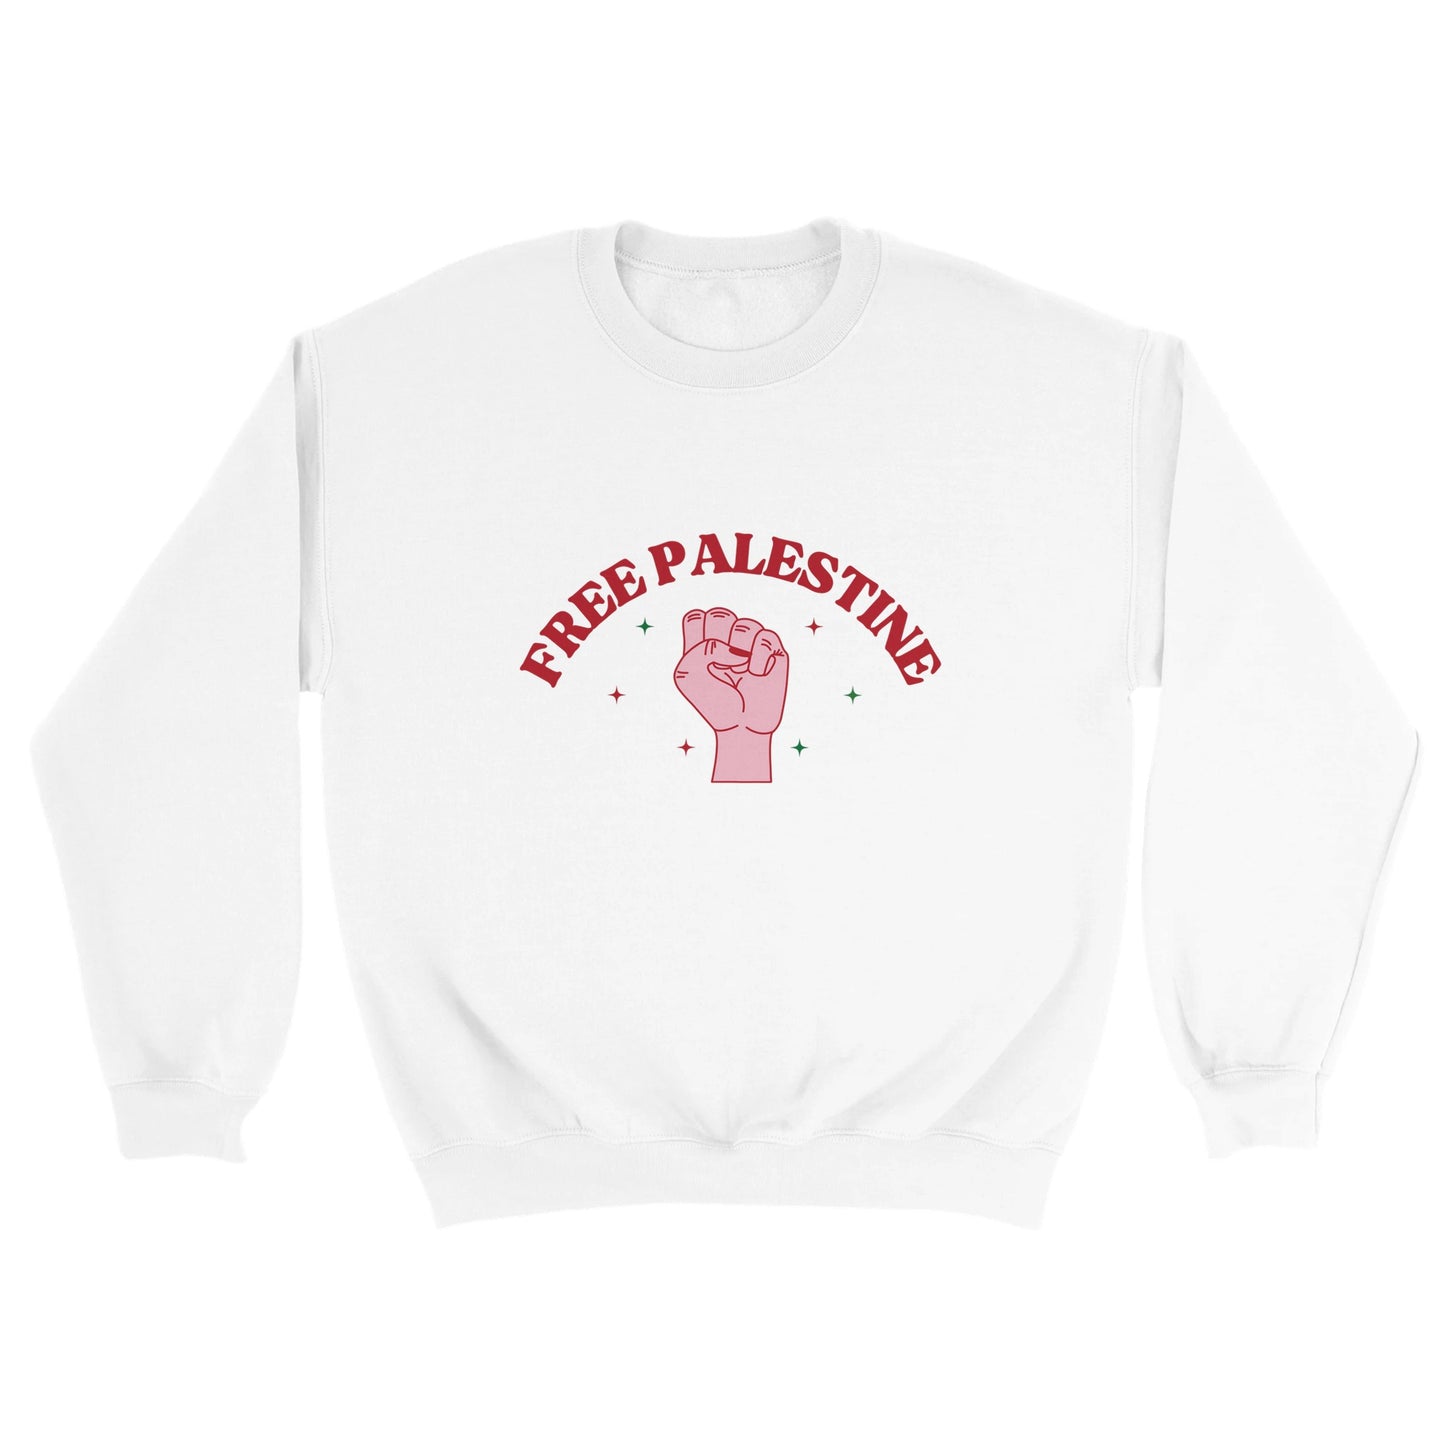 Free Palestine Fist Sweatshirt